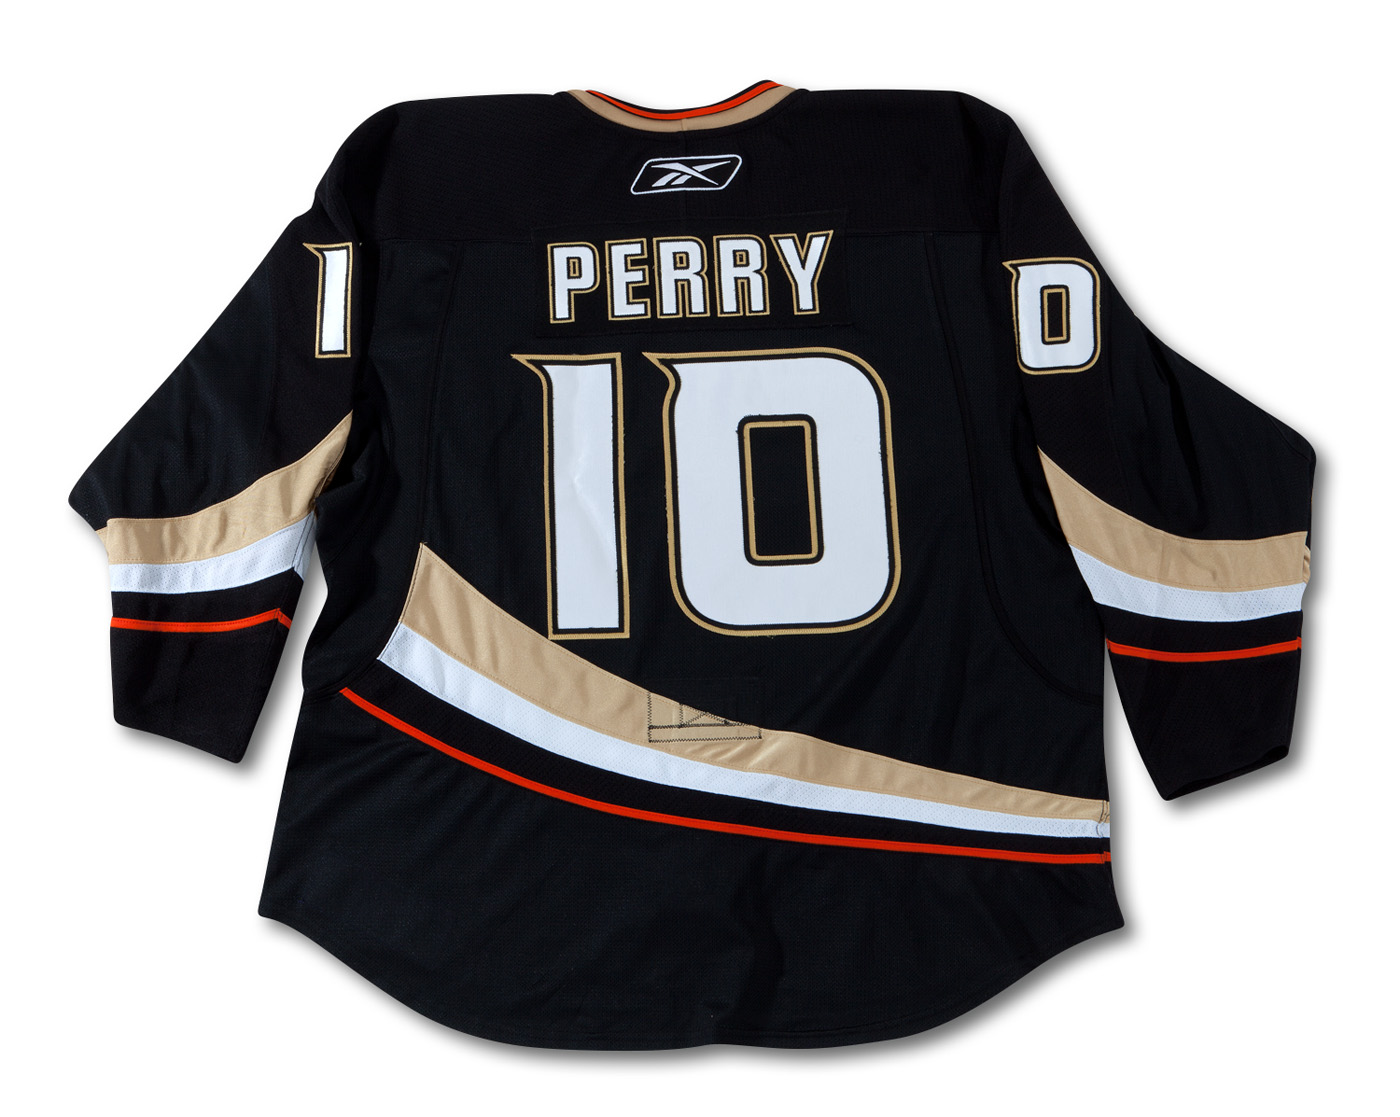 Corey Perry Anaheim Ducks Autographed Black Reebok Premier